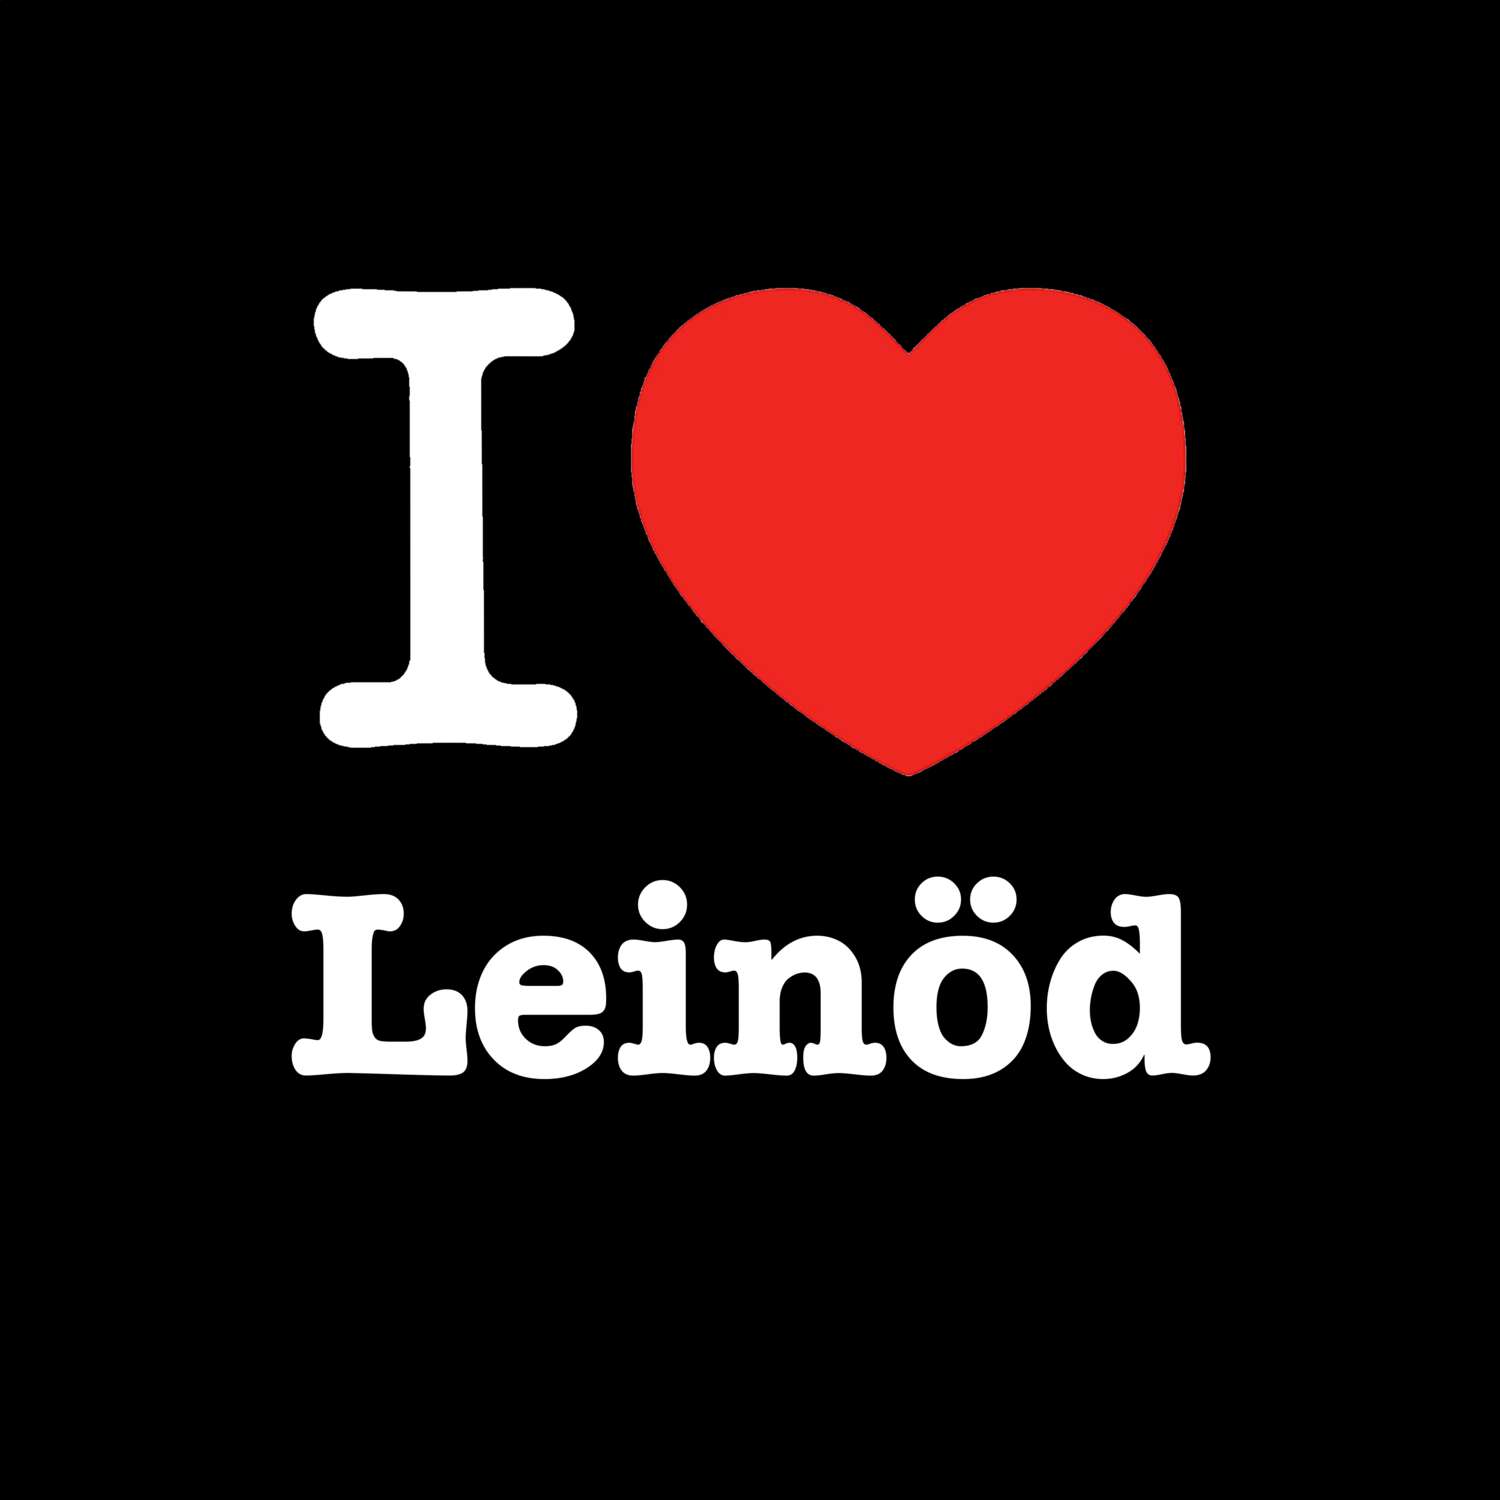 Leinöd T-Shirt »I love«